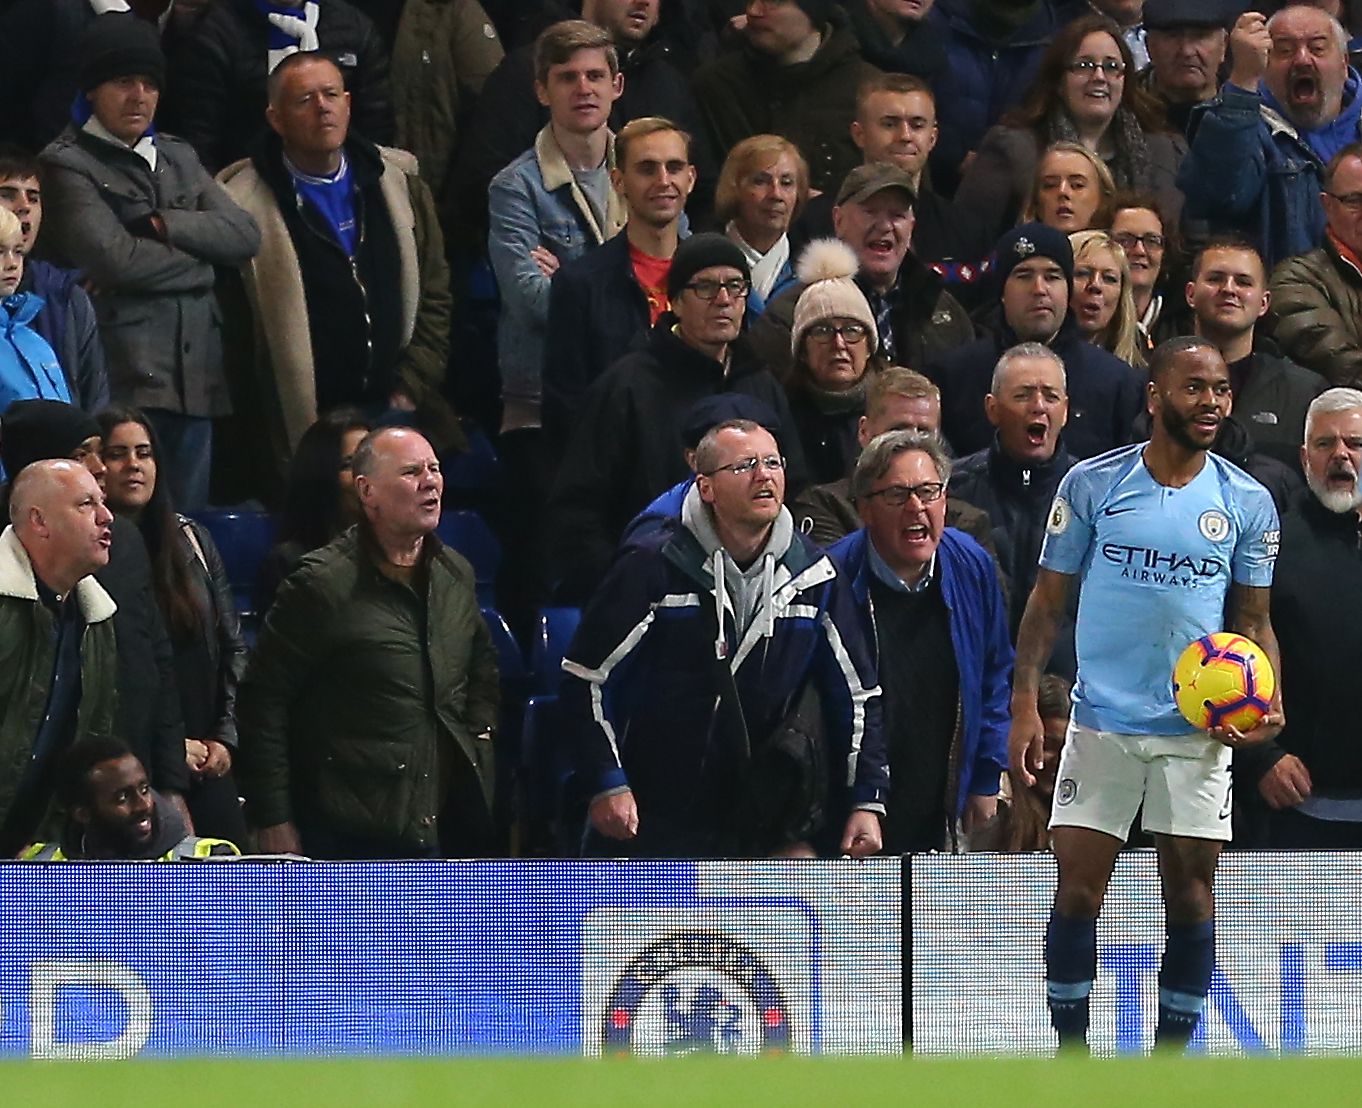 Raheem Sterling of Manchester City receives alleged abuse from Chelsea fans
Chelsea v Manchester City, Premier League, Football, Stamford Bridge, London, UK. (Shutterstock)